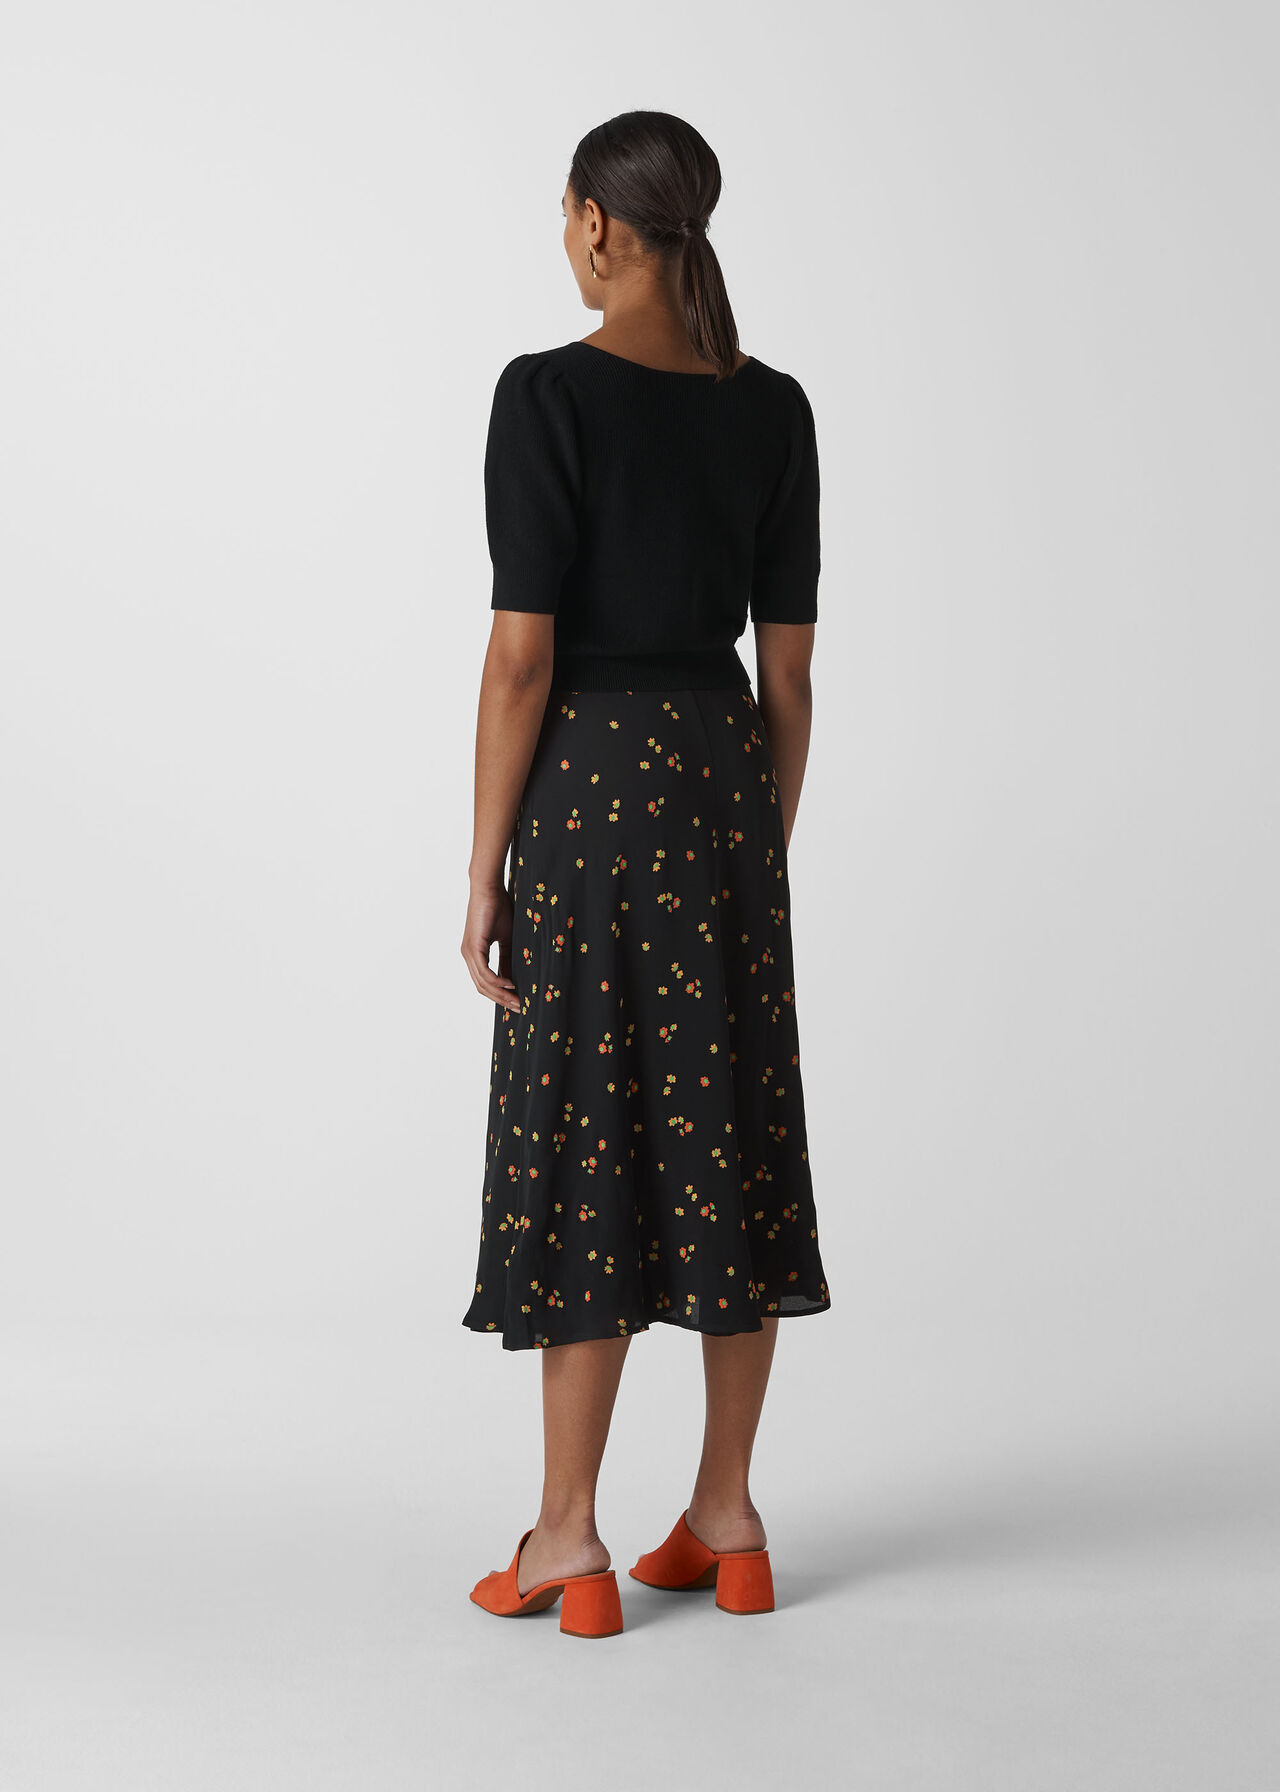 Micro Floral Longline Skirt Black/Multi